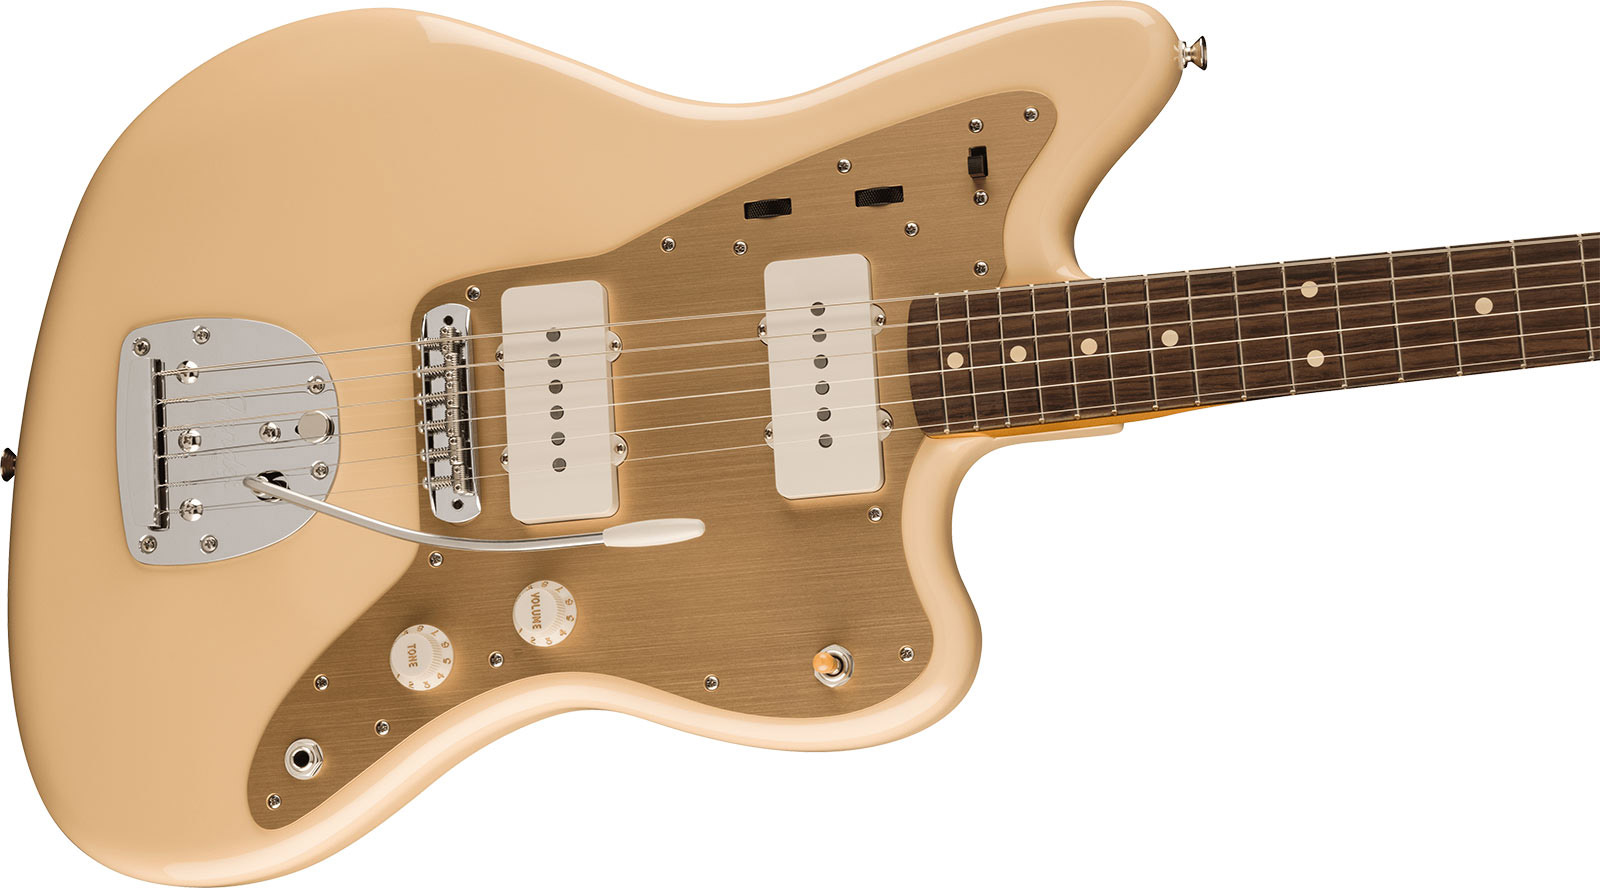 Fender Jazzmaster 50s Vintera 2 Mex 2s Trem Rw - Desert Sand - Retro rock electric guitar - Variation 2